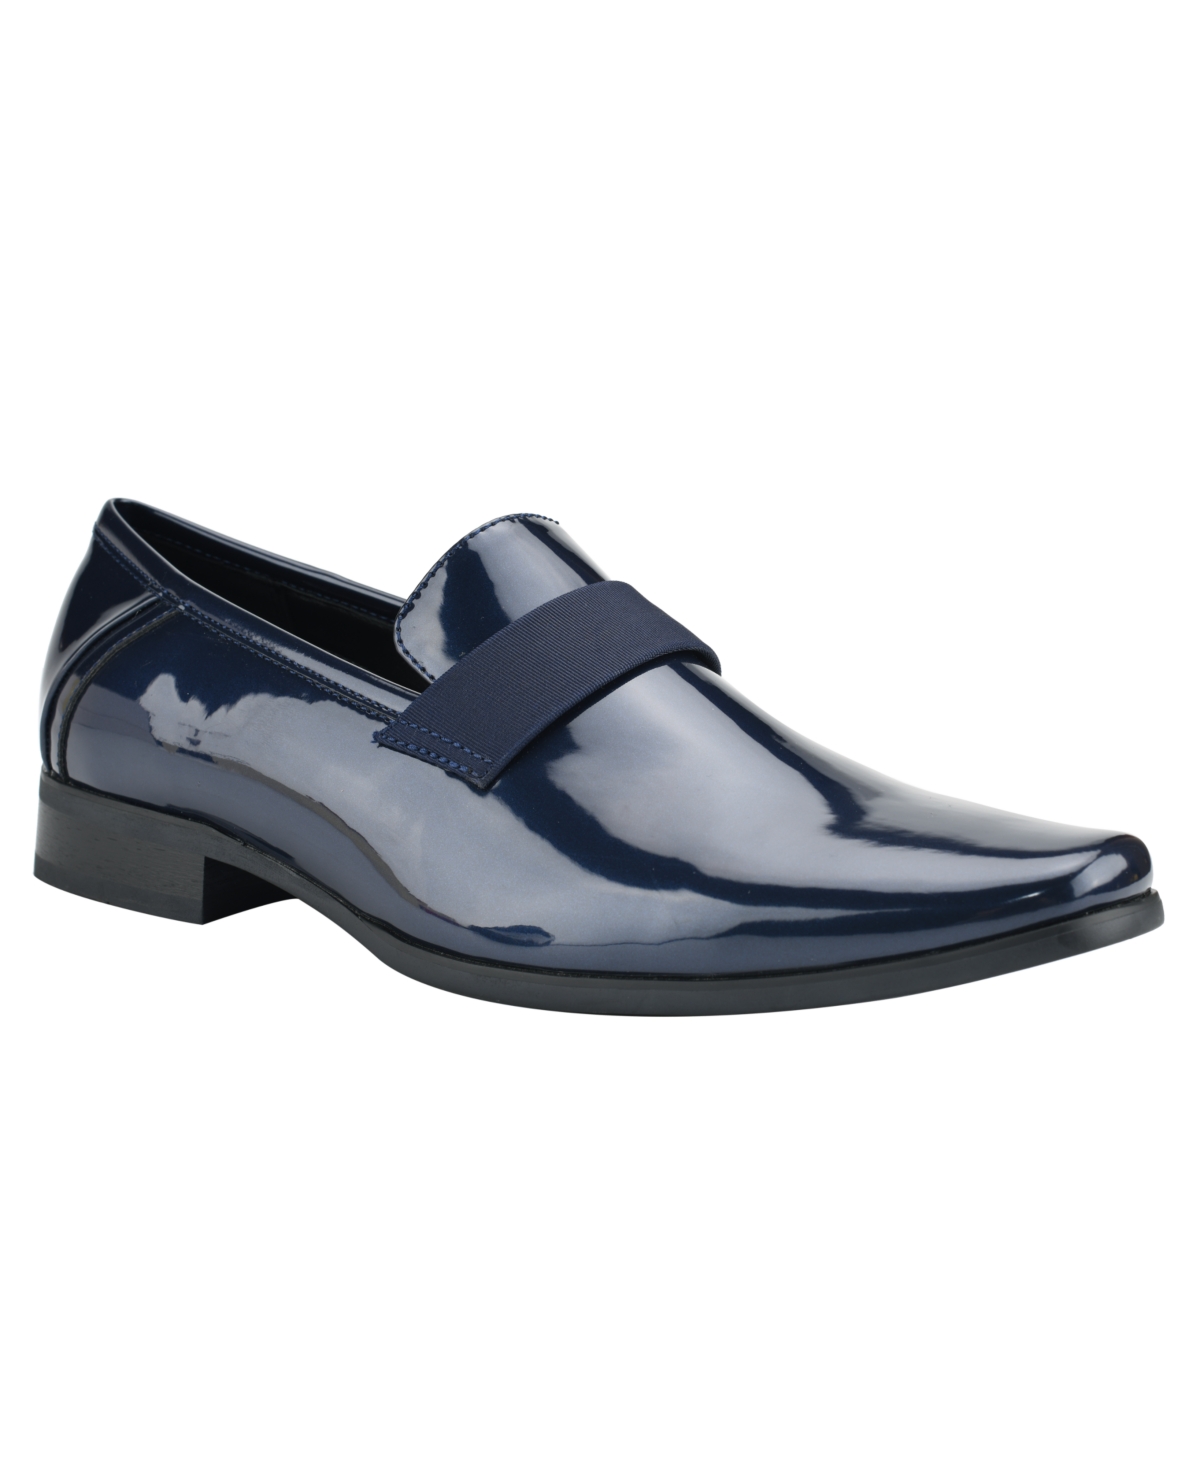 Calvin Klein Men's Bernard Patent Leather Tuxedo Dress Shoes Men's Shoes In Dark Blue Patent